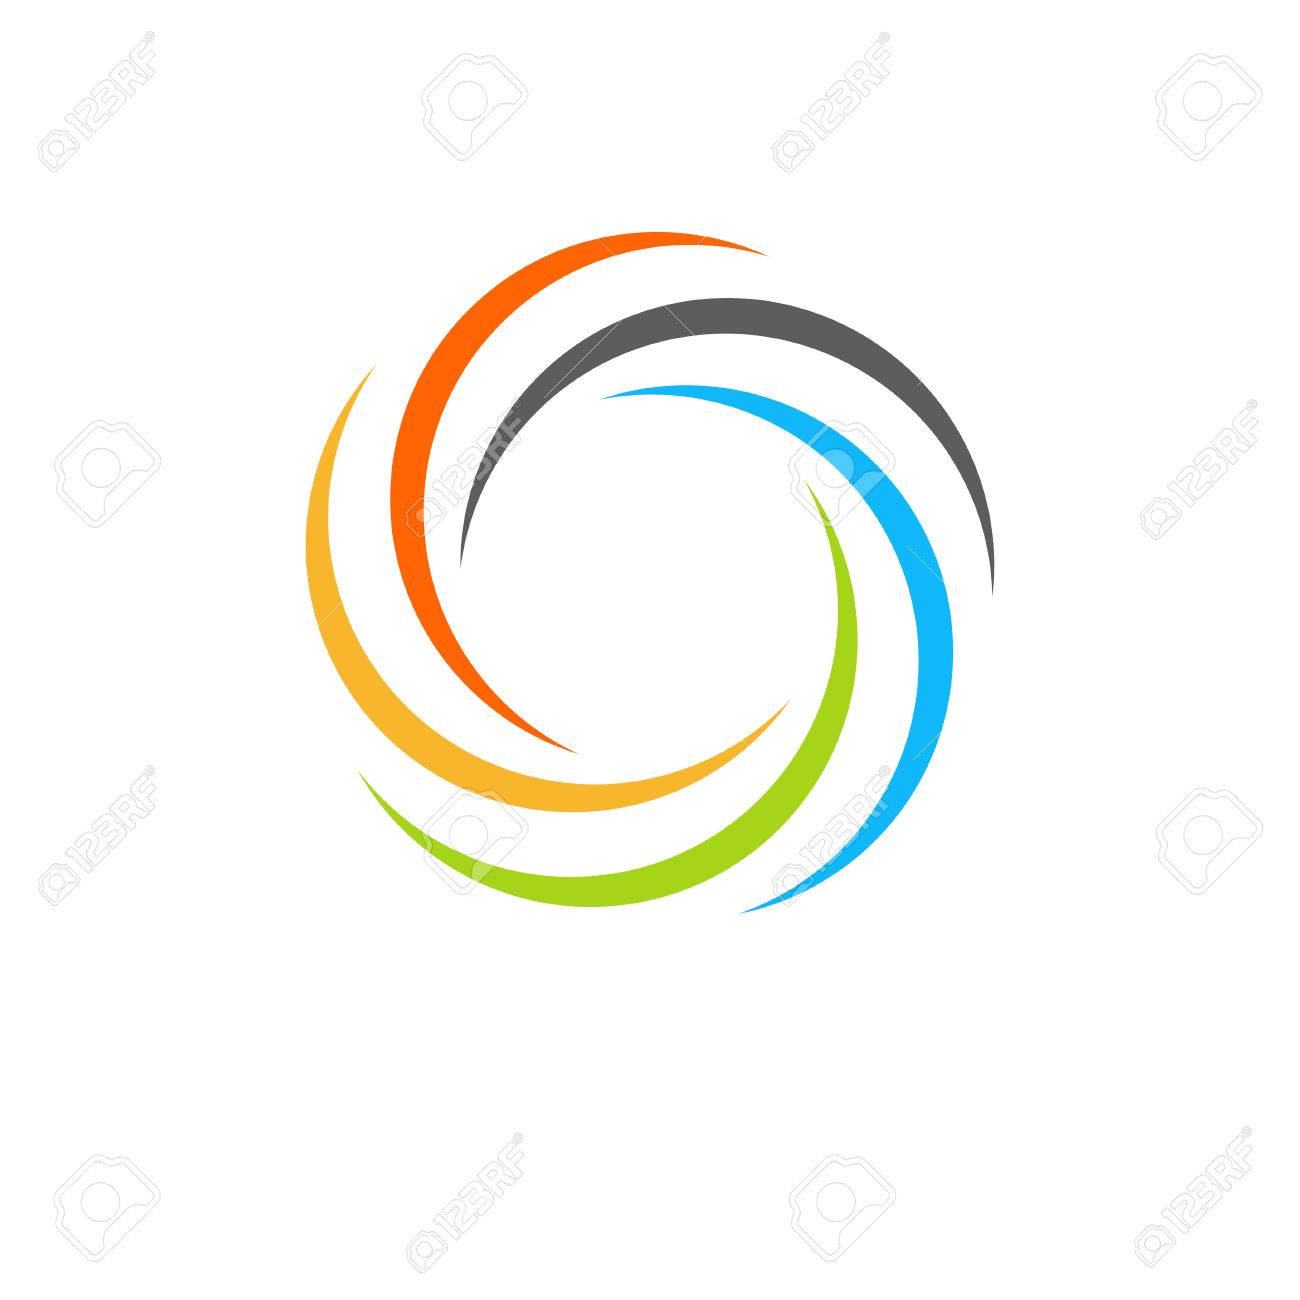 An image of a hurricane spiral. eps vector - Search Clip Art 